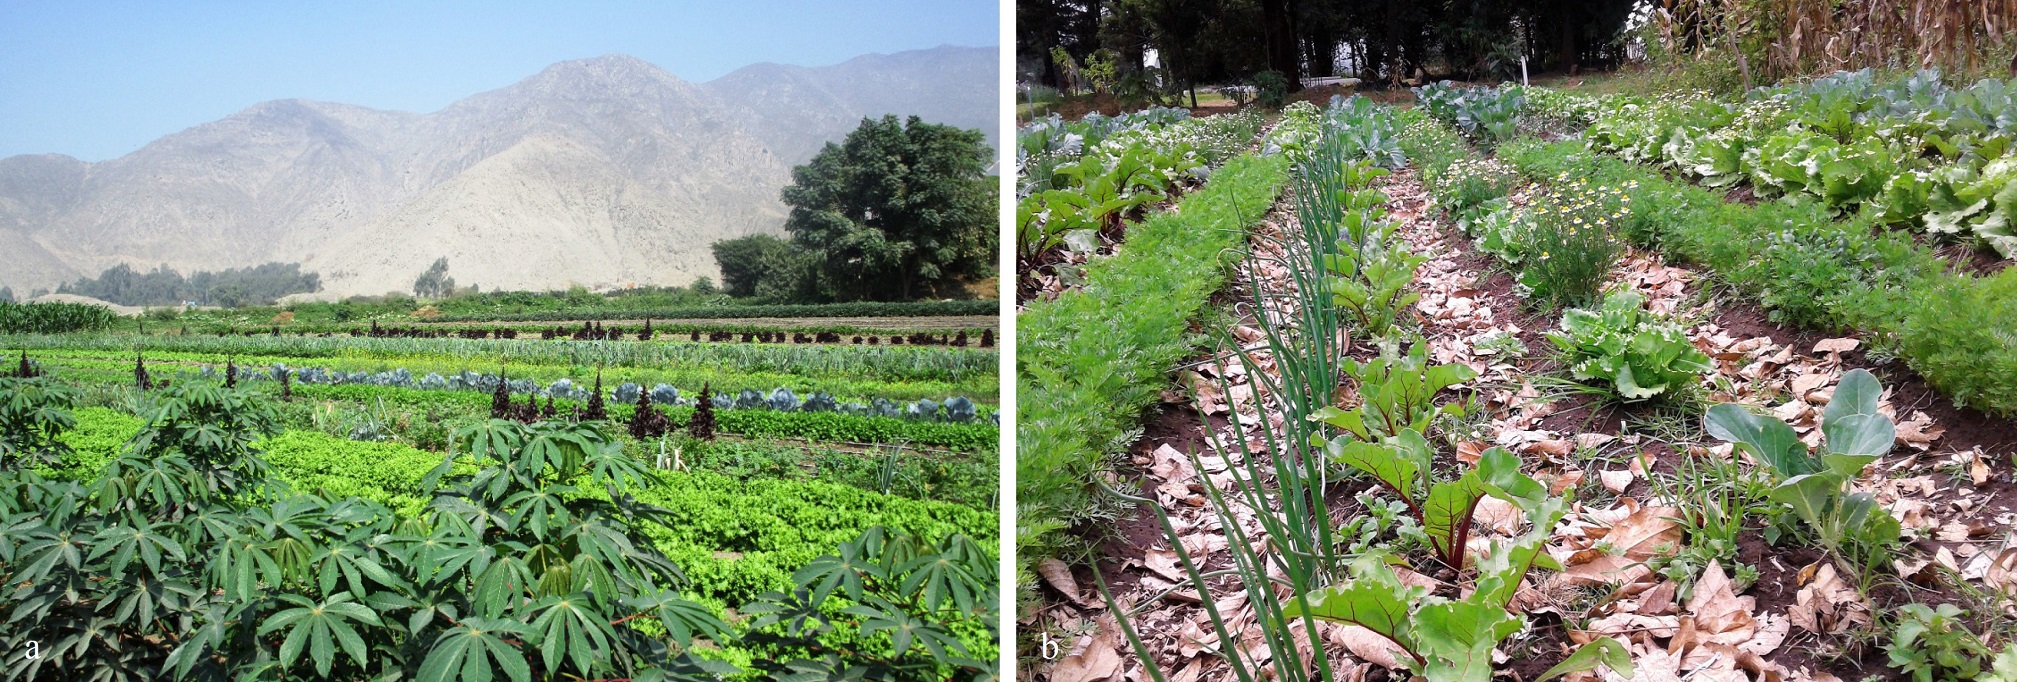 Asociación de cultivos con especies hortícolas: a. Perú-valle del Lurín, b. Ecuador- valle de Tumbaco.